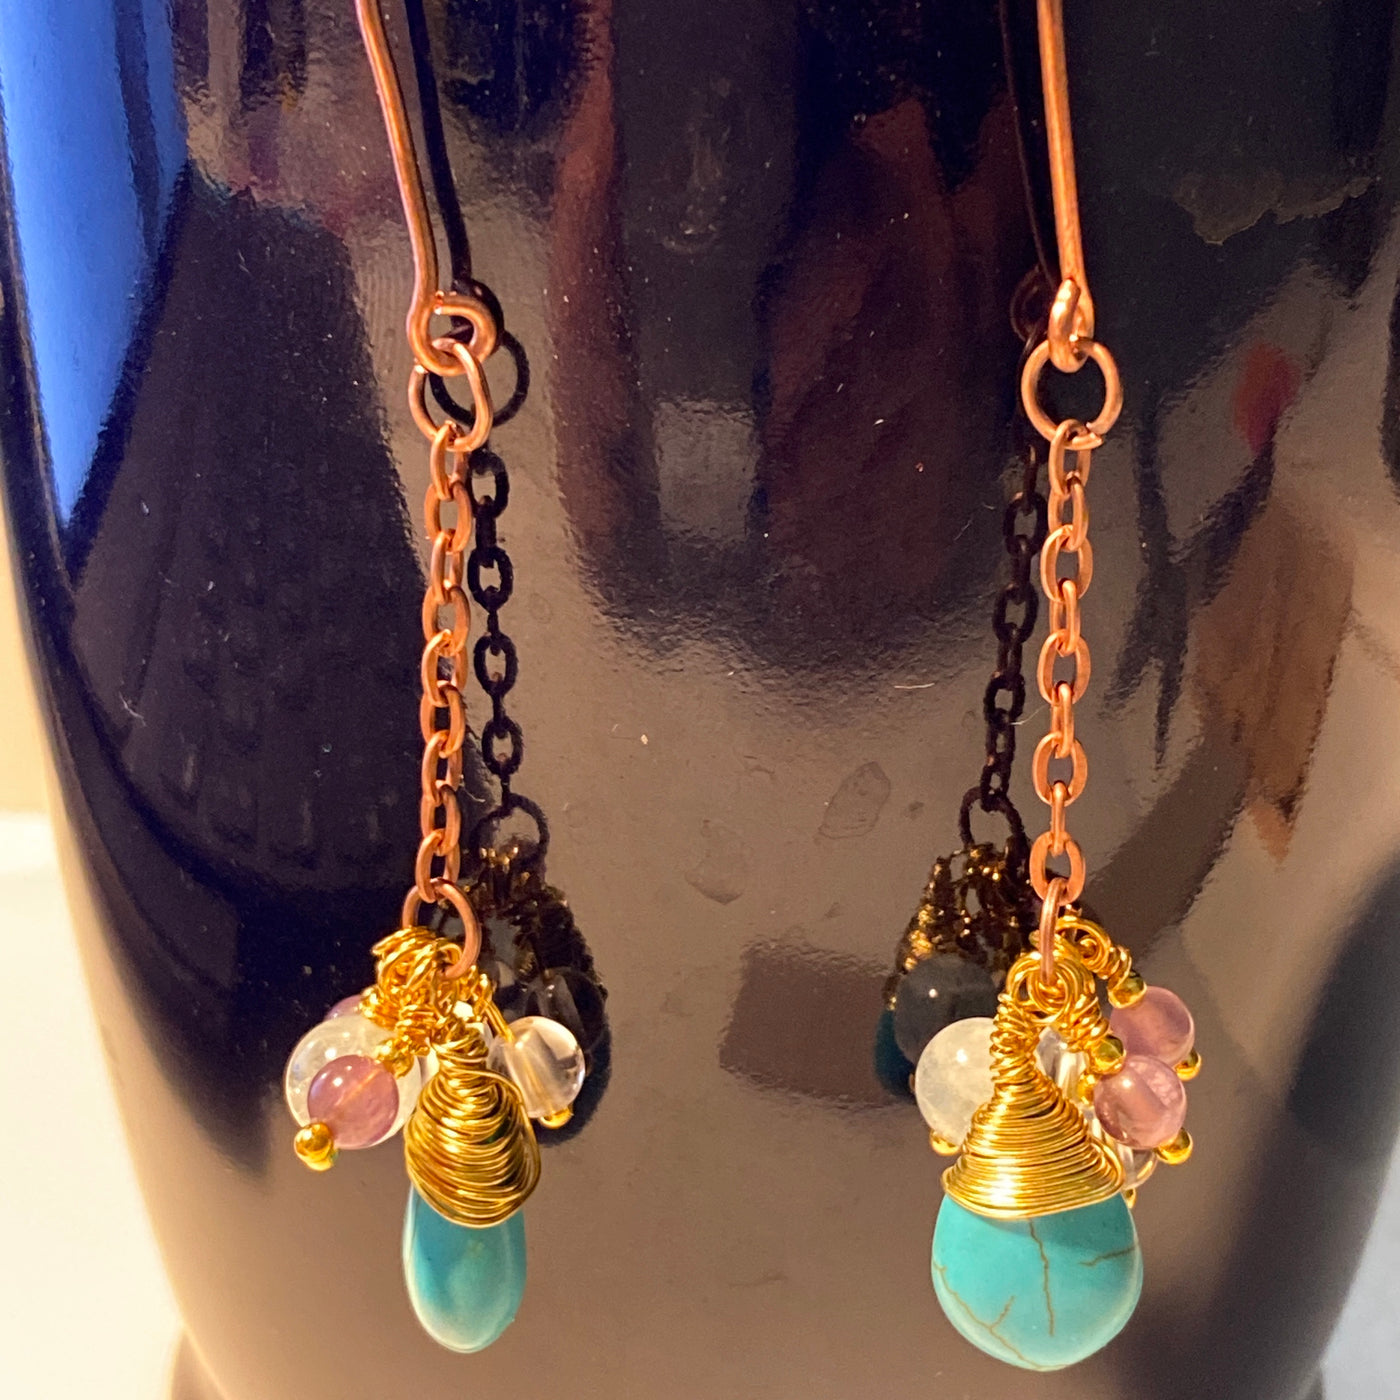 Blue howlite briolette, acquamarine, amethyst and rose quartz in chain earrings